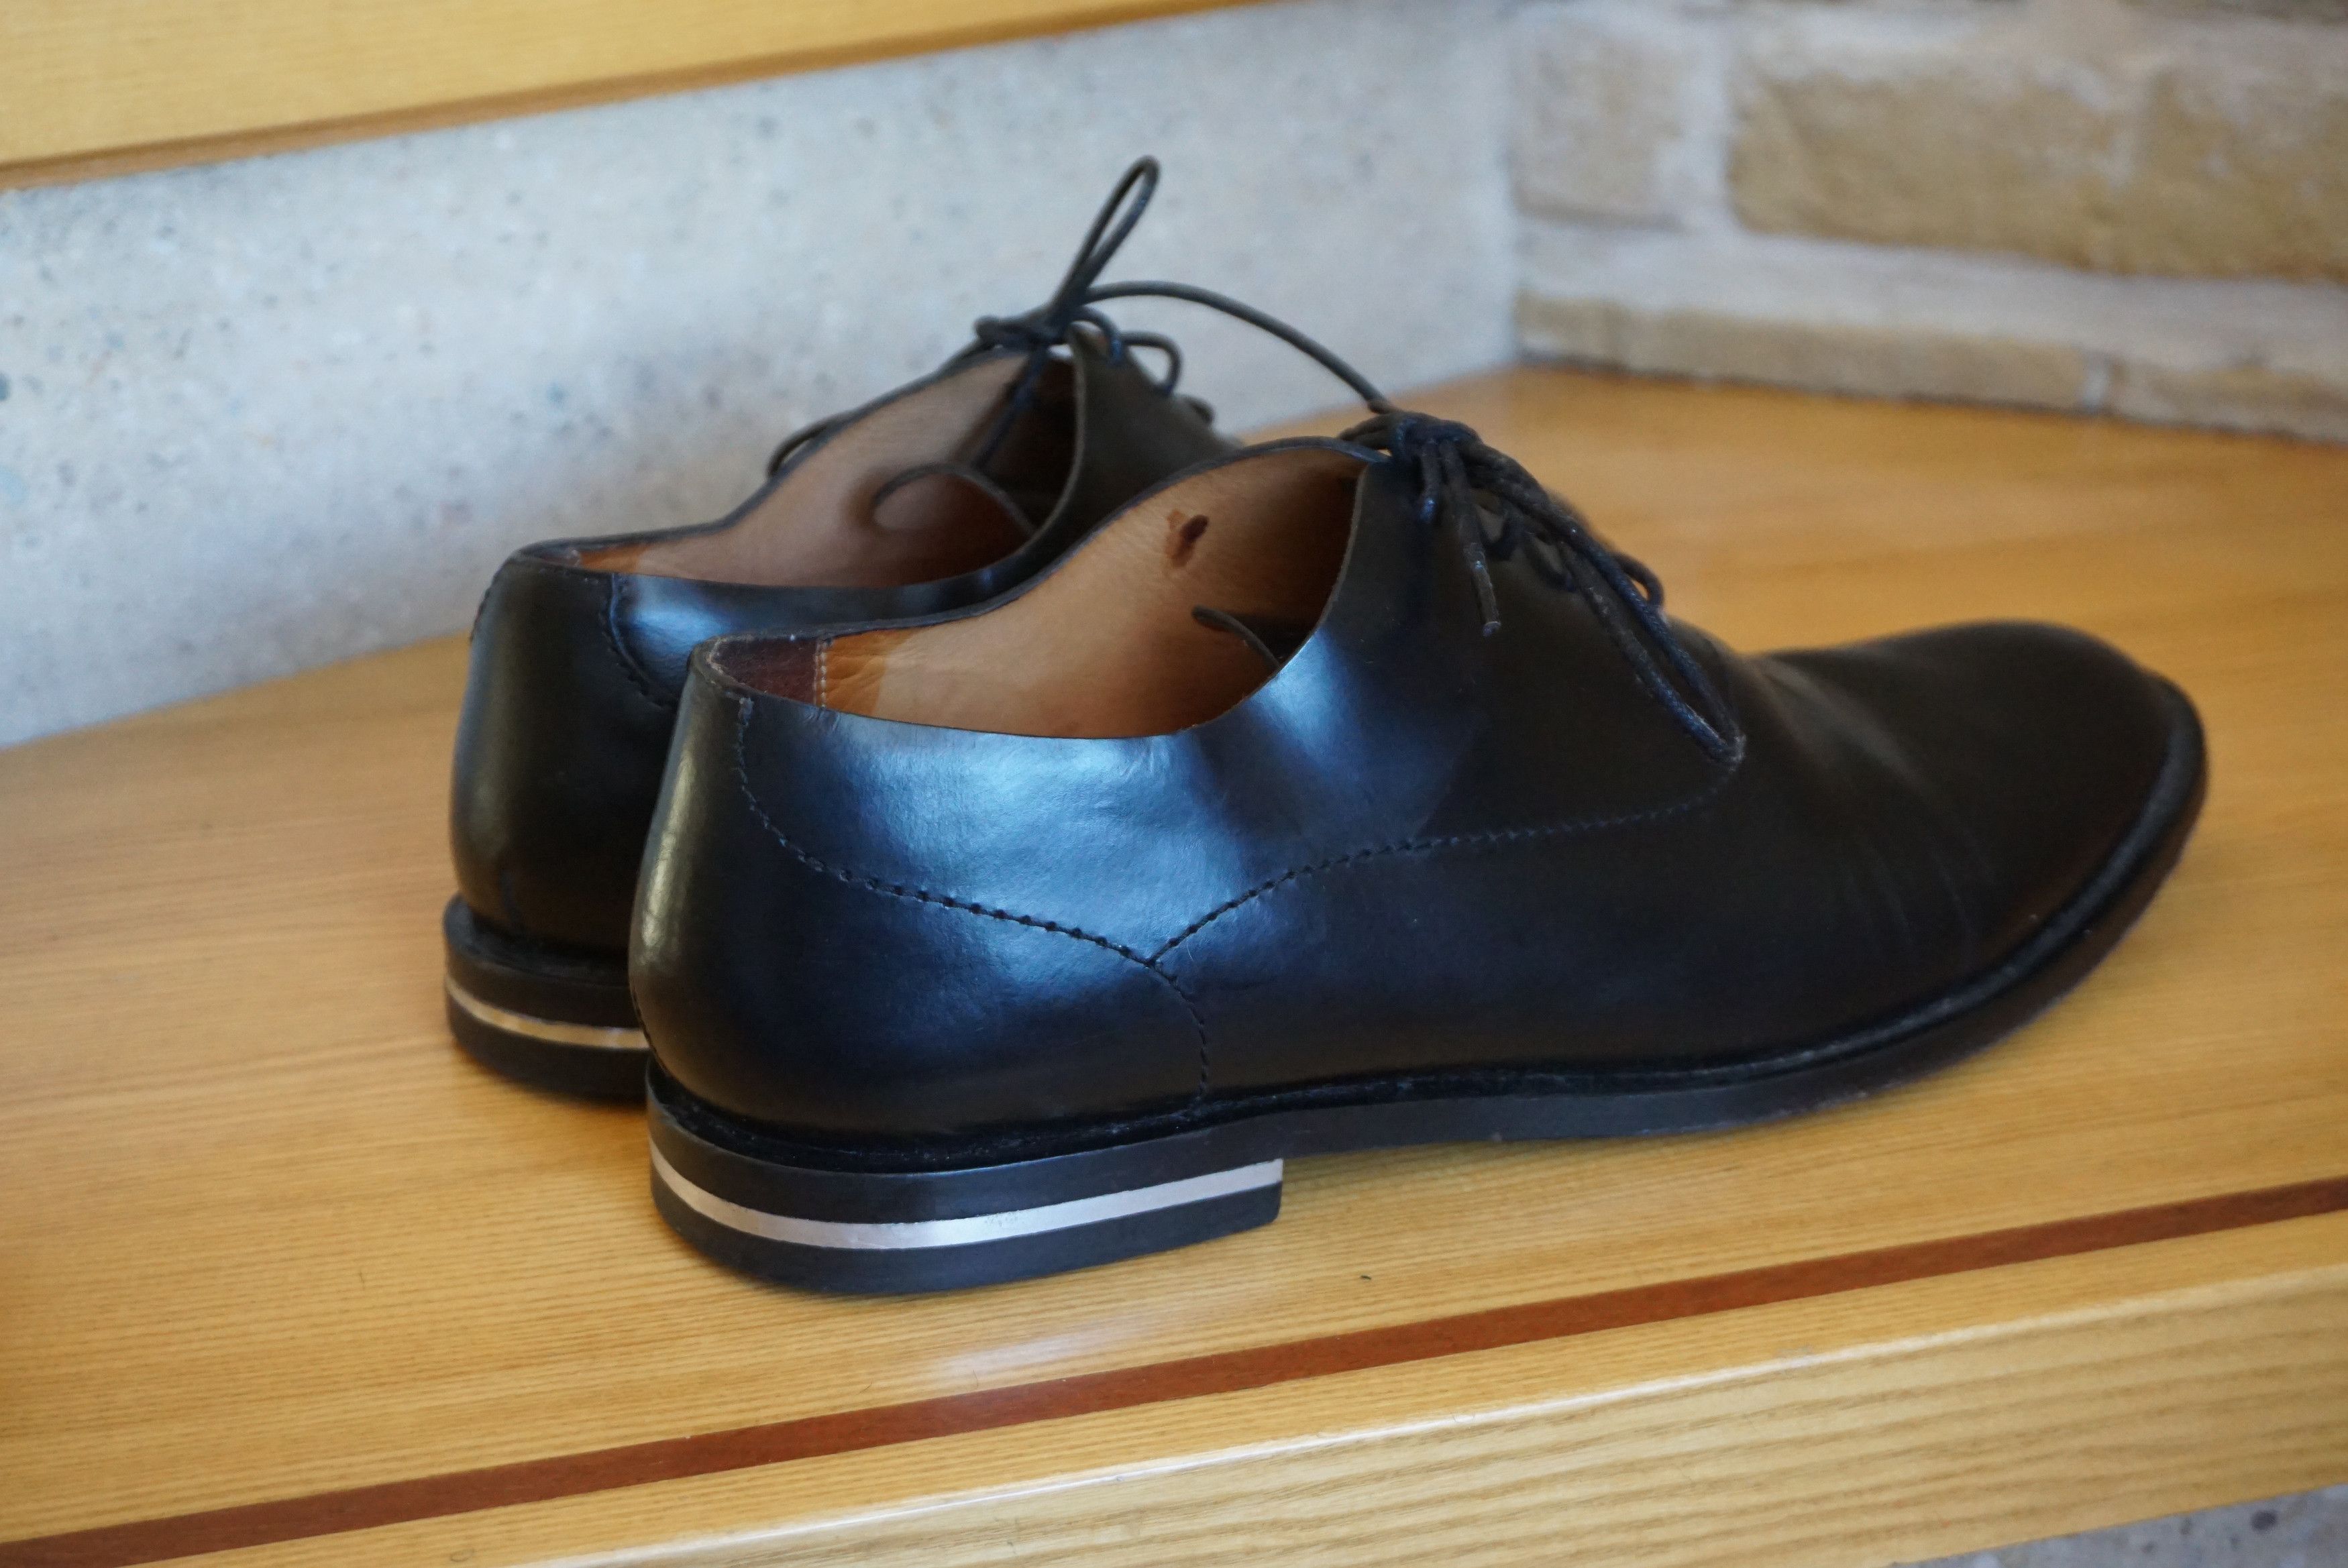 Cos COS RPR$250 leather office shoes EU44 black formal lace up Size US 10.5 / EU 43-44 - 10 Thumbnail